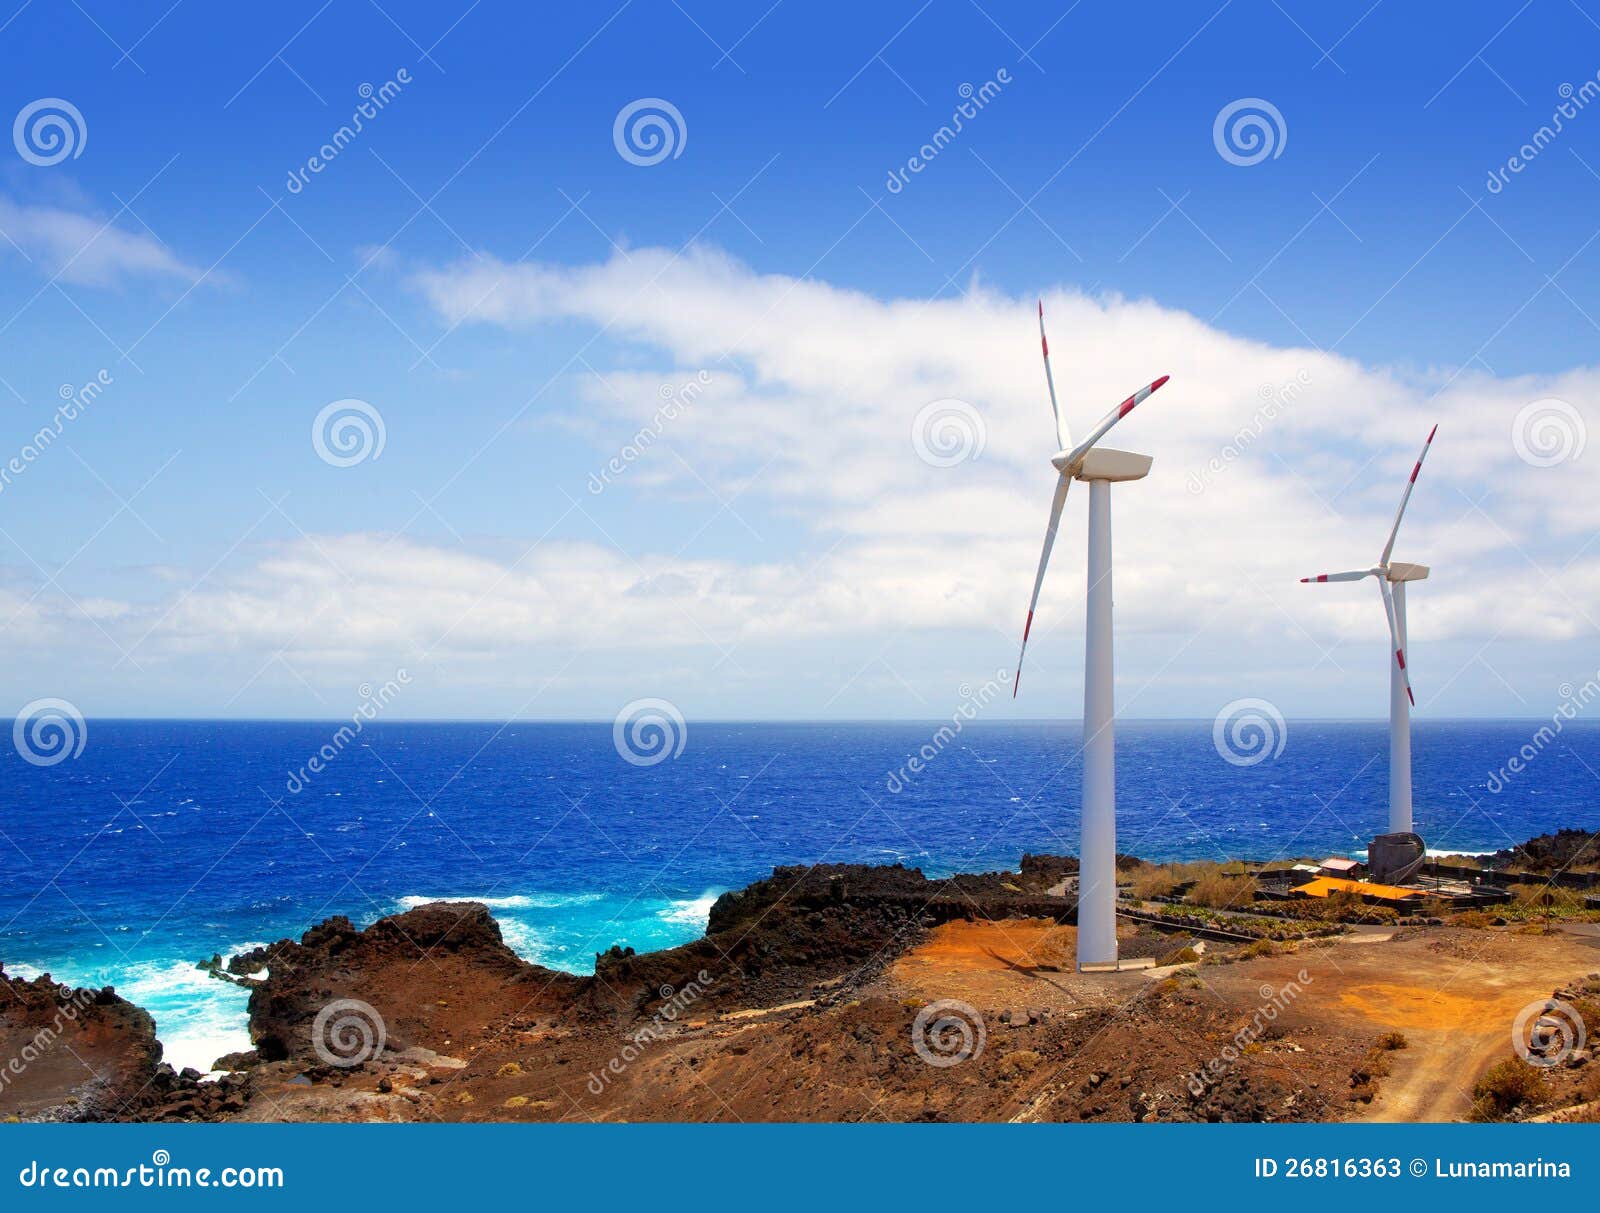 aerogenerator windmills in front of ocean sea